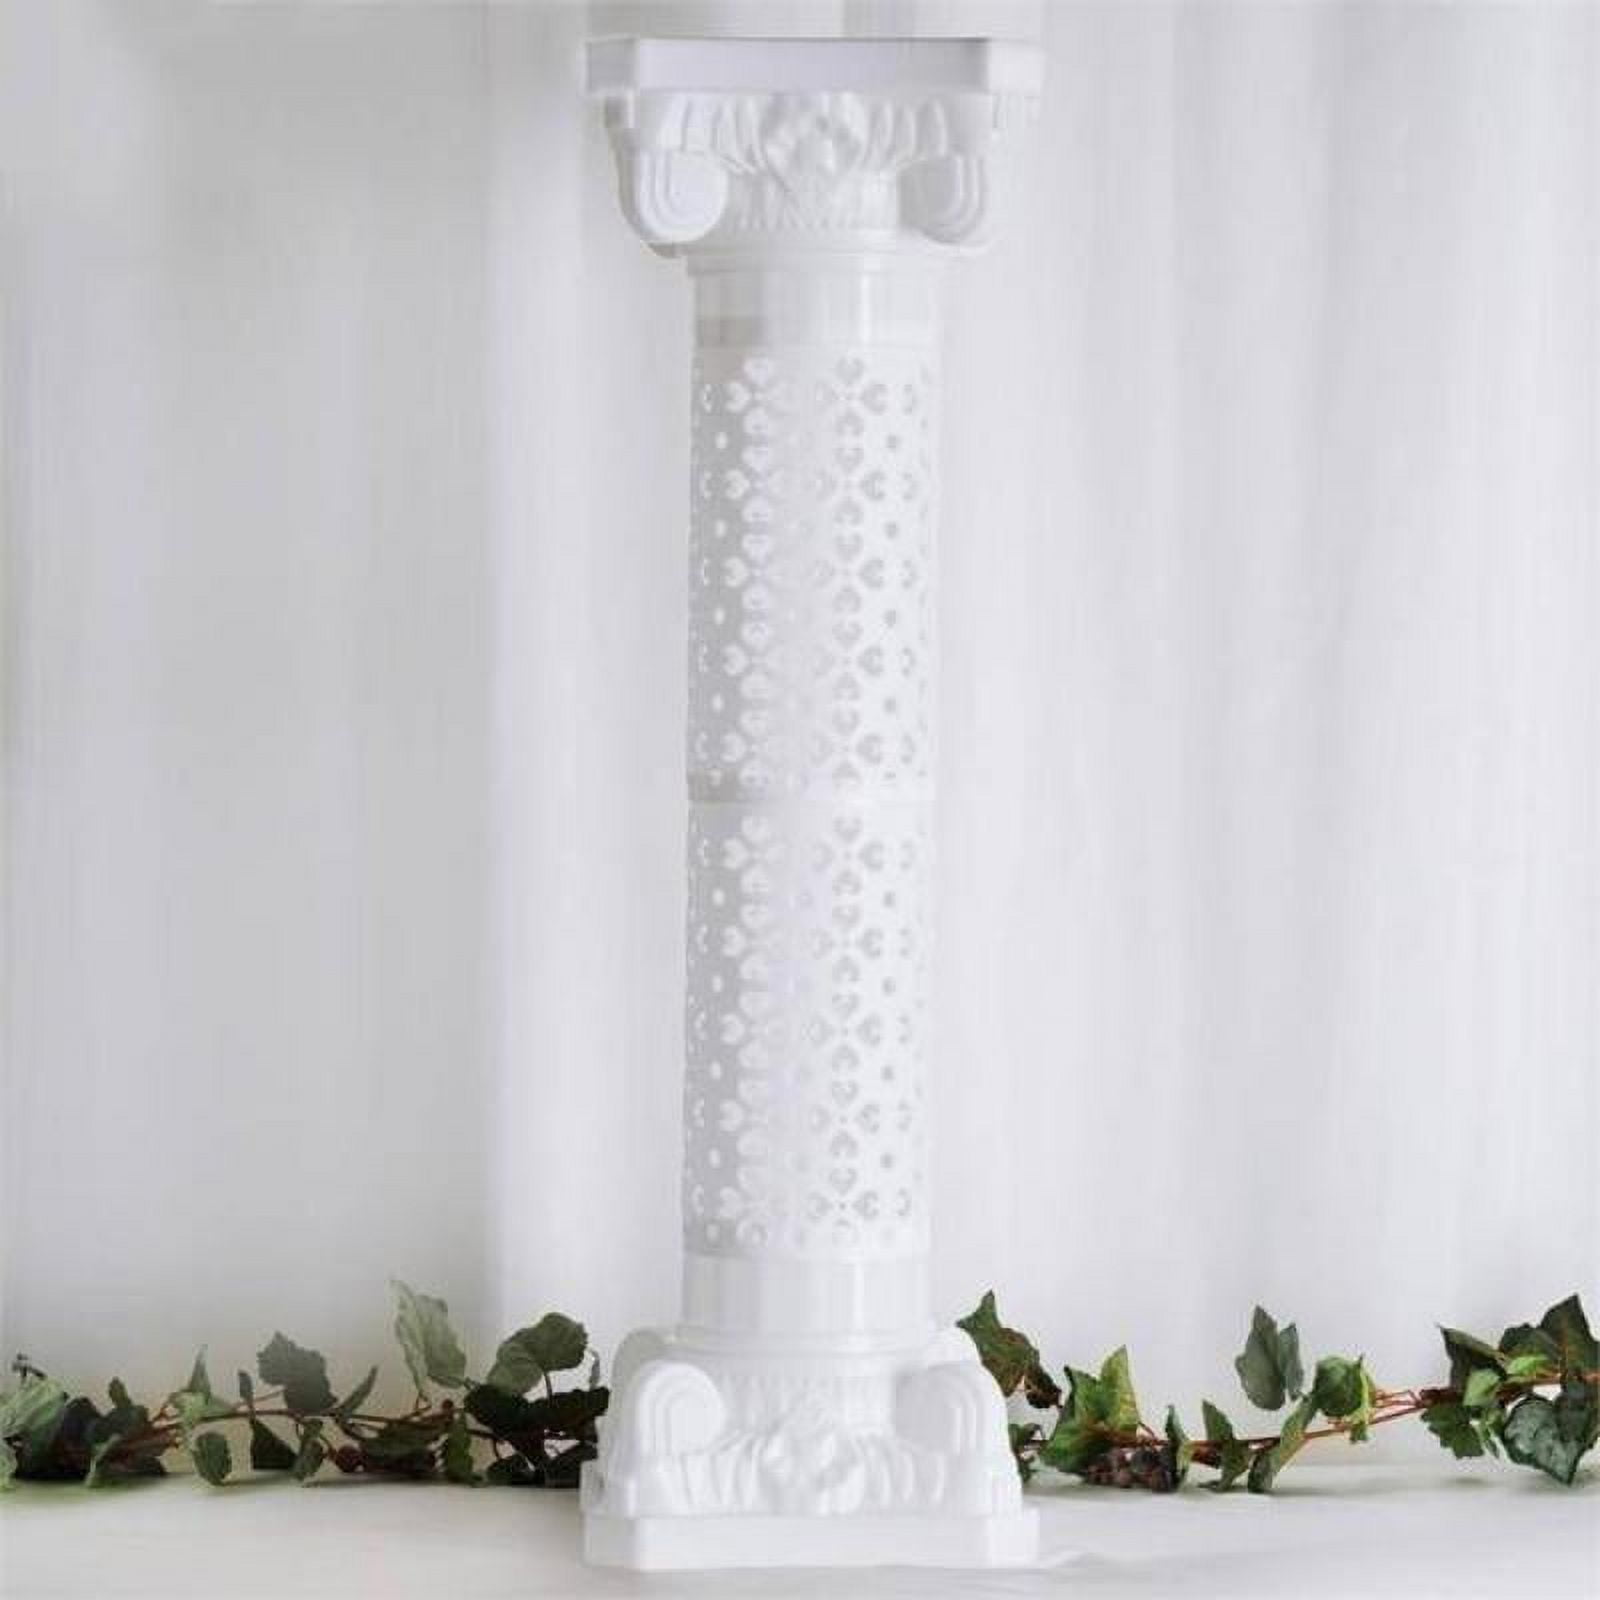 42 X 12 X 12 Black Display Pedestal Stand Riser Column Pillar Plinth 